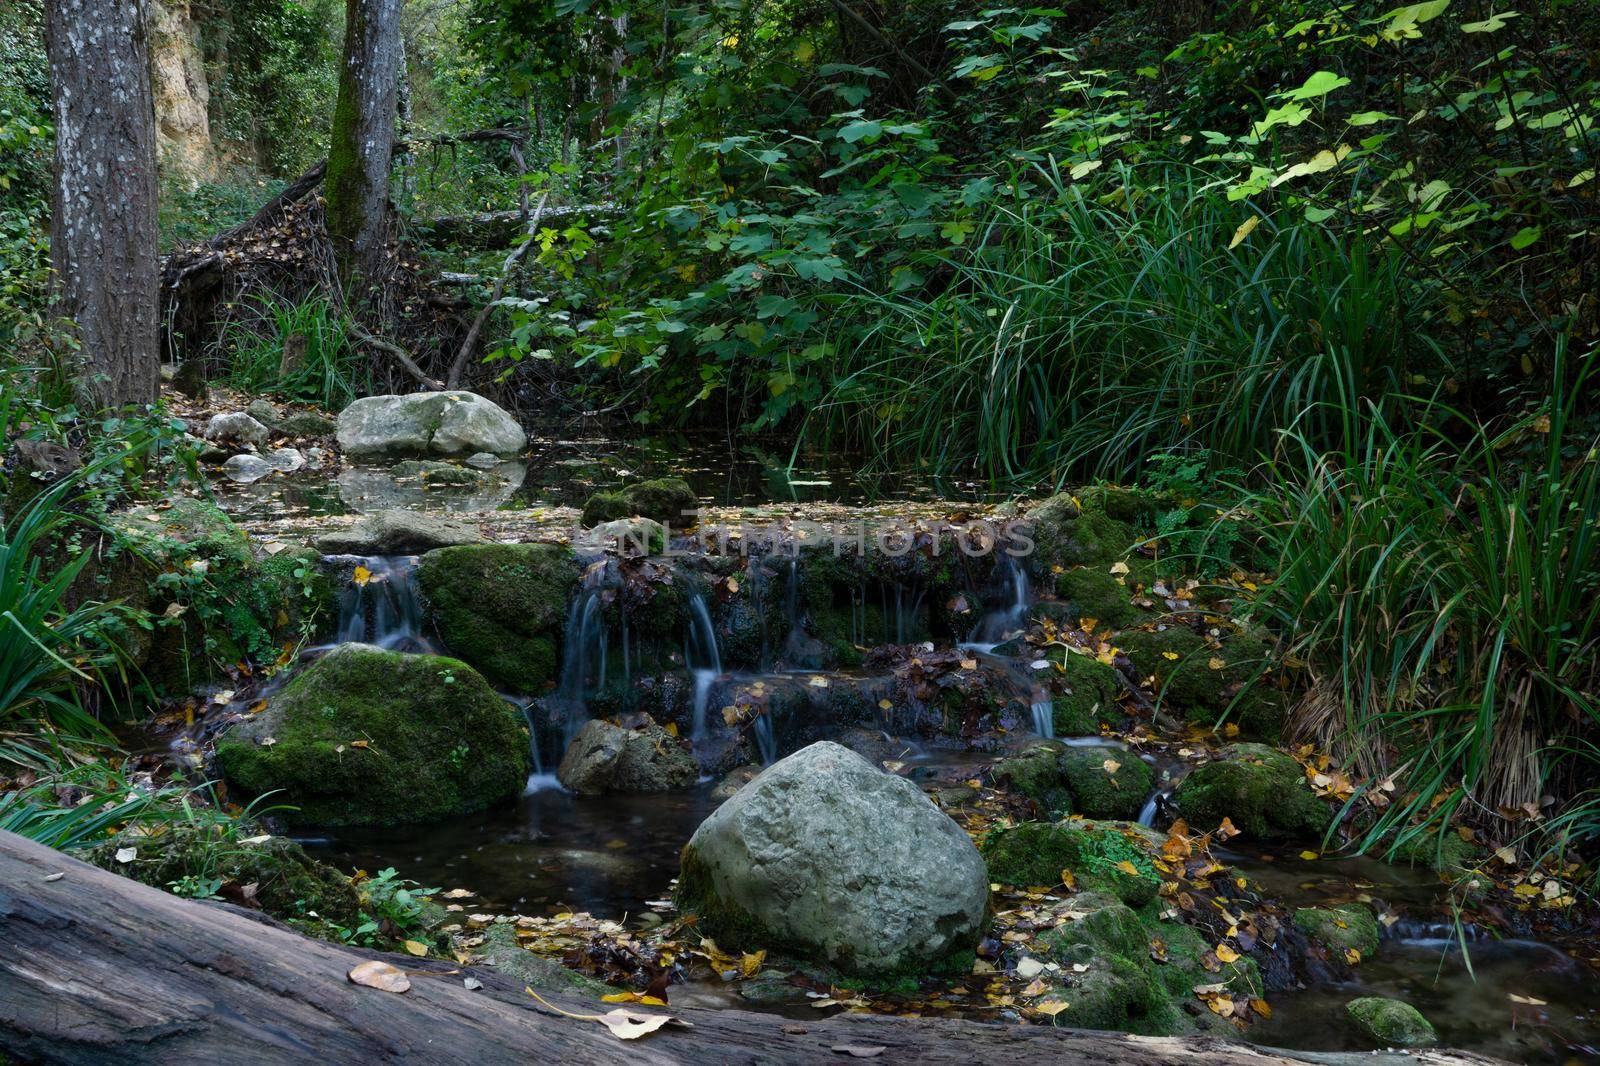 waterfall in a high mountain stream, dense vegetation, fishing shelter